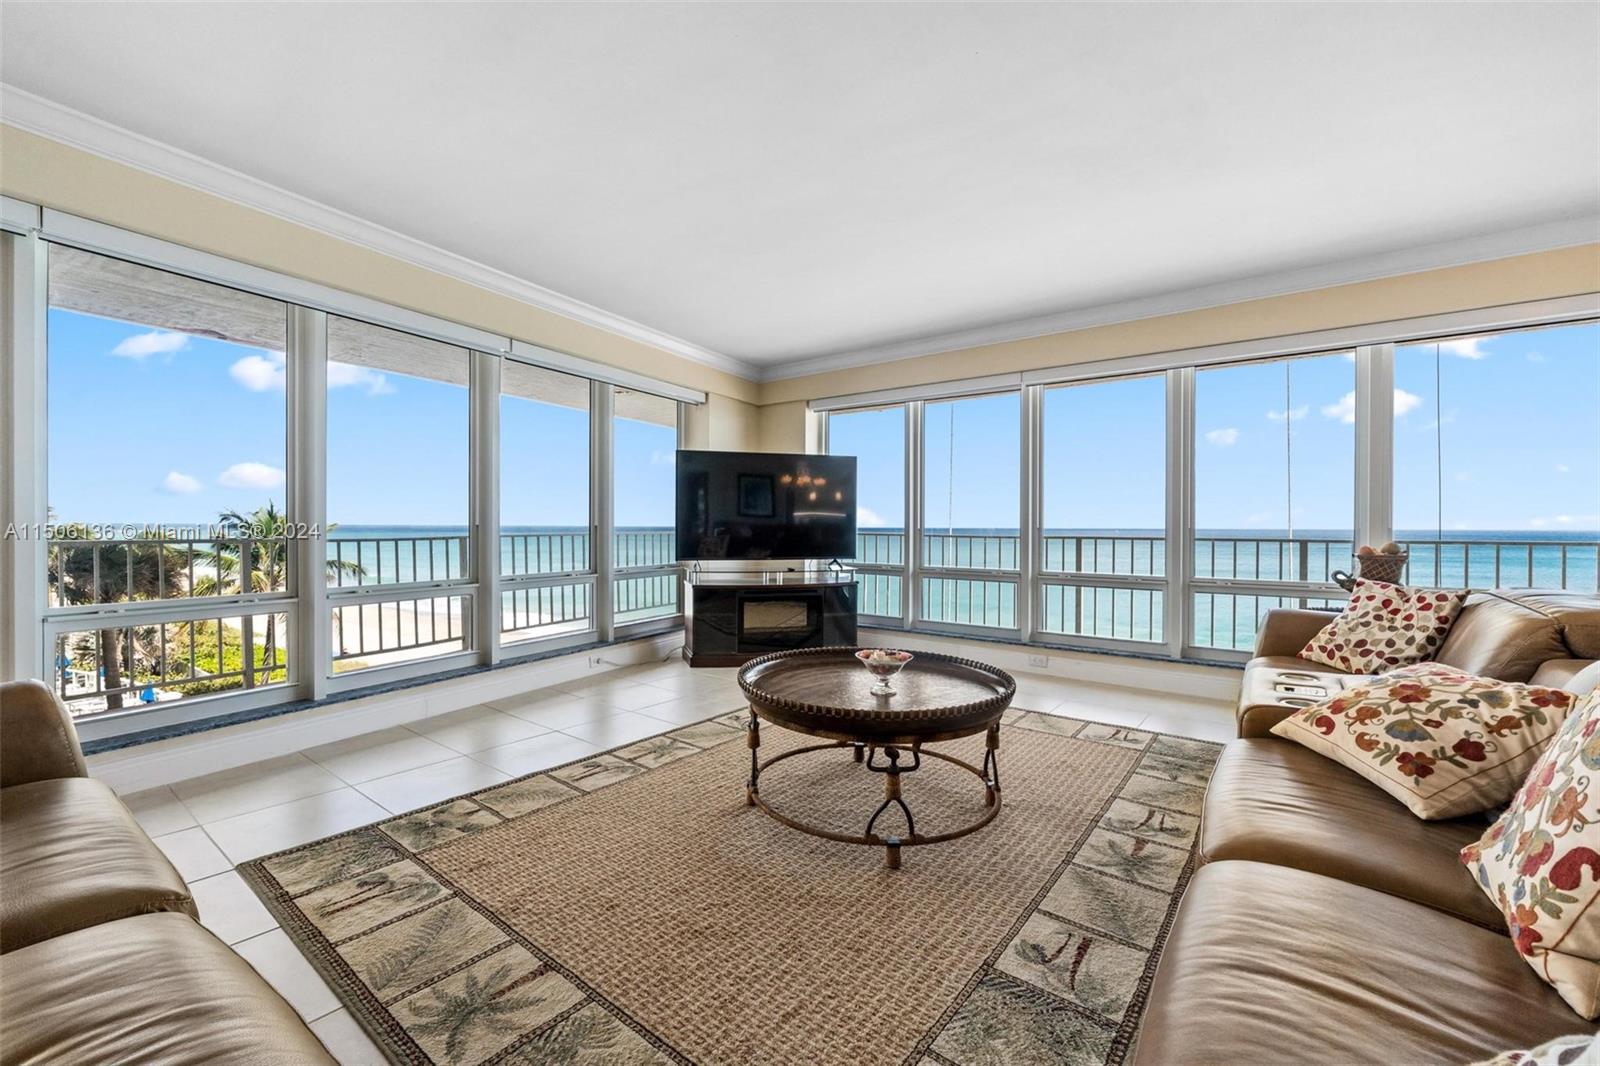 Property for Sale at 4100 Galt Ocean Dr 414, Fort Lauderdale, Broward County, Florida - Bedrooms: 2 
Bathrooms: 2  - $1,409,000